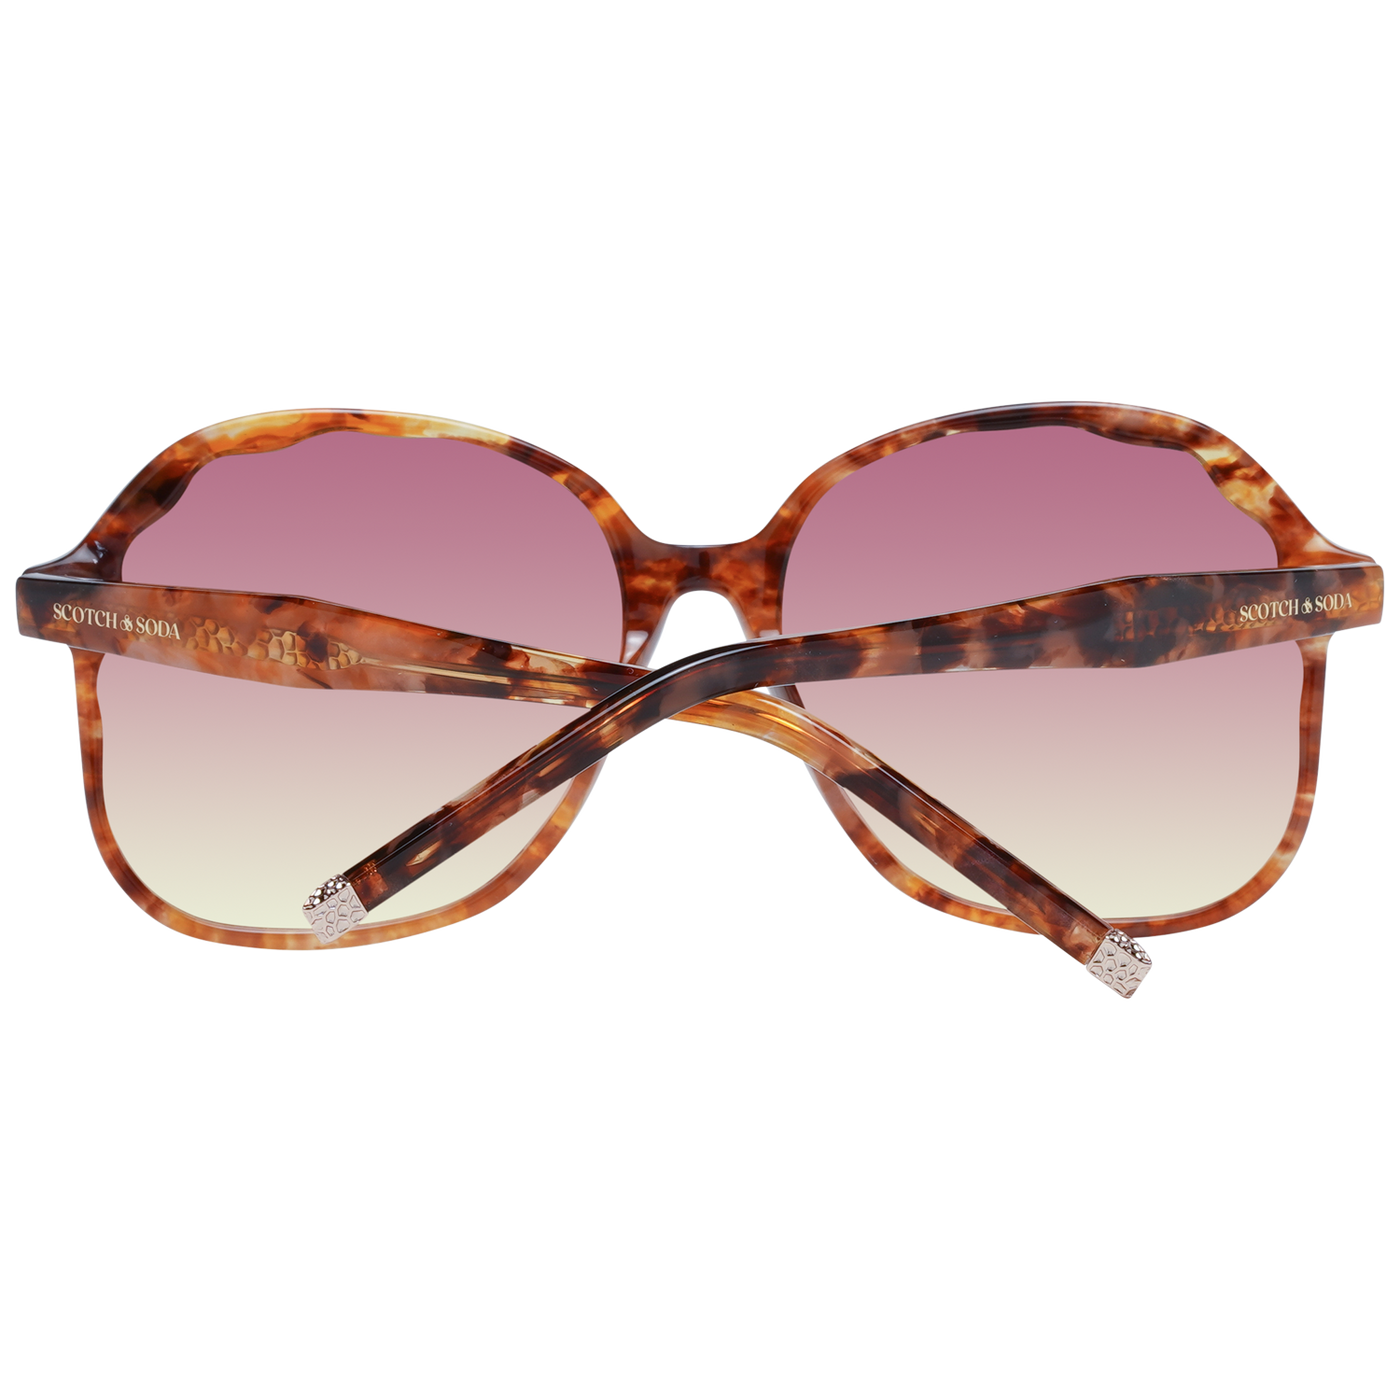 Scotch & Soda Brown Women Sunglasses